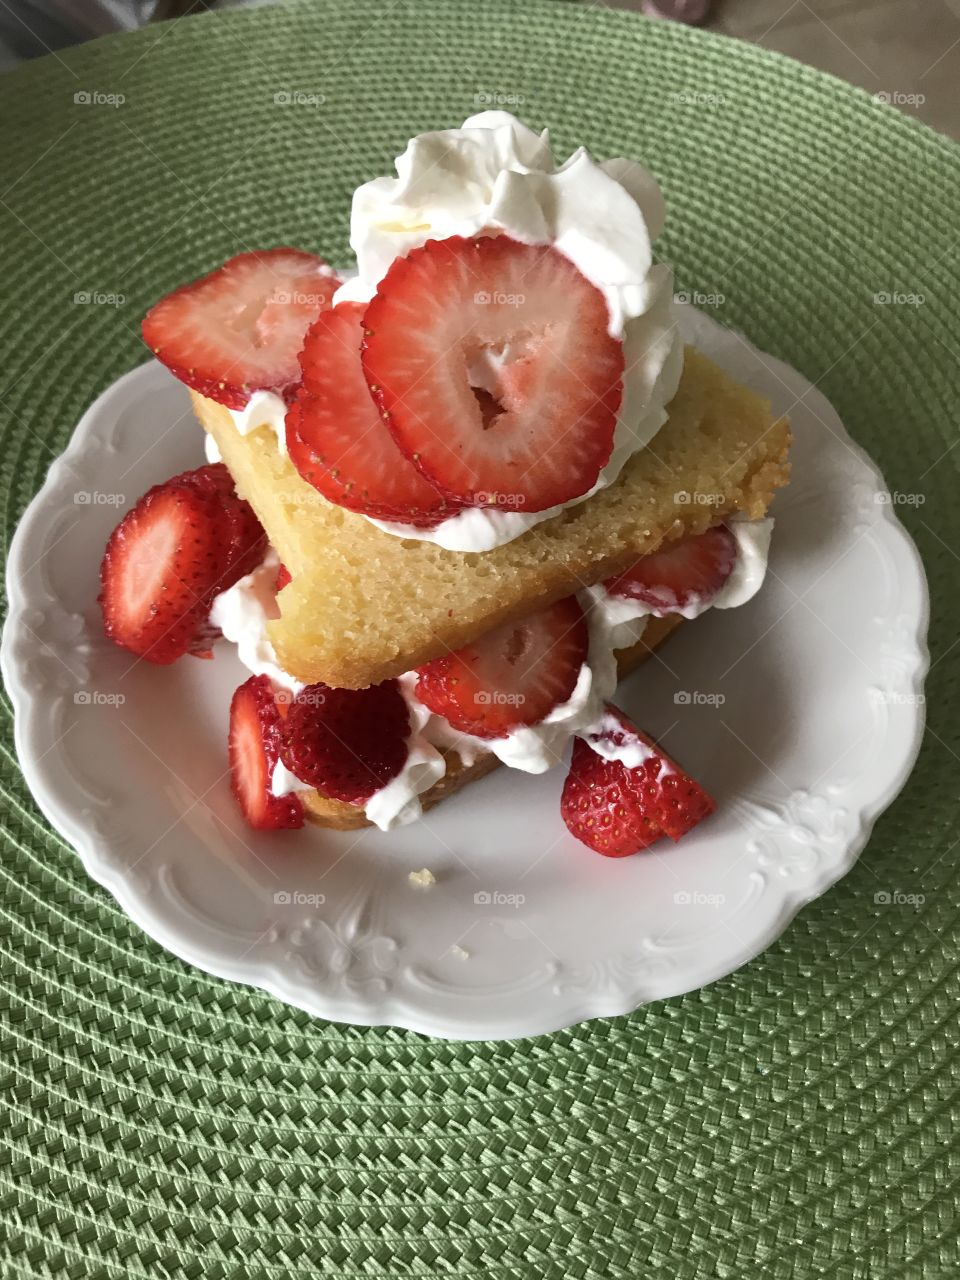 Perfectly imperfect strawberry shortcake 